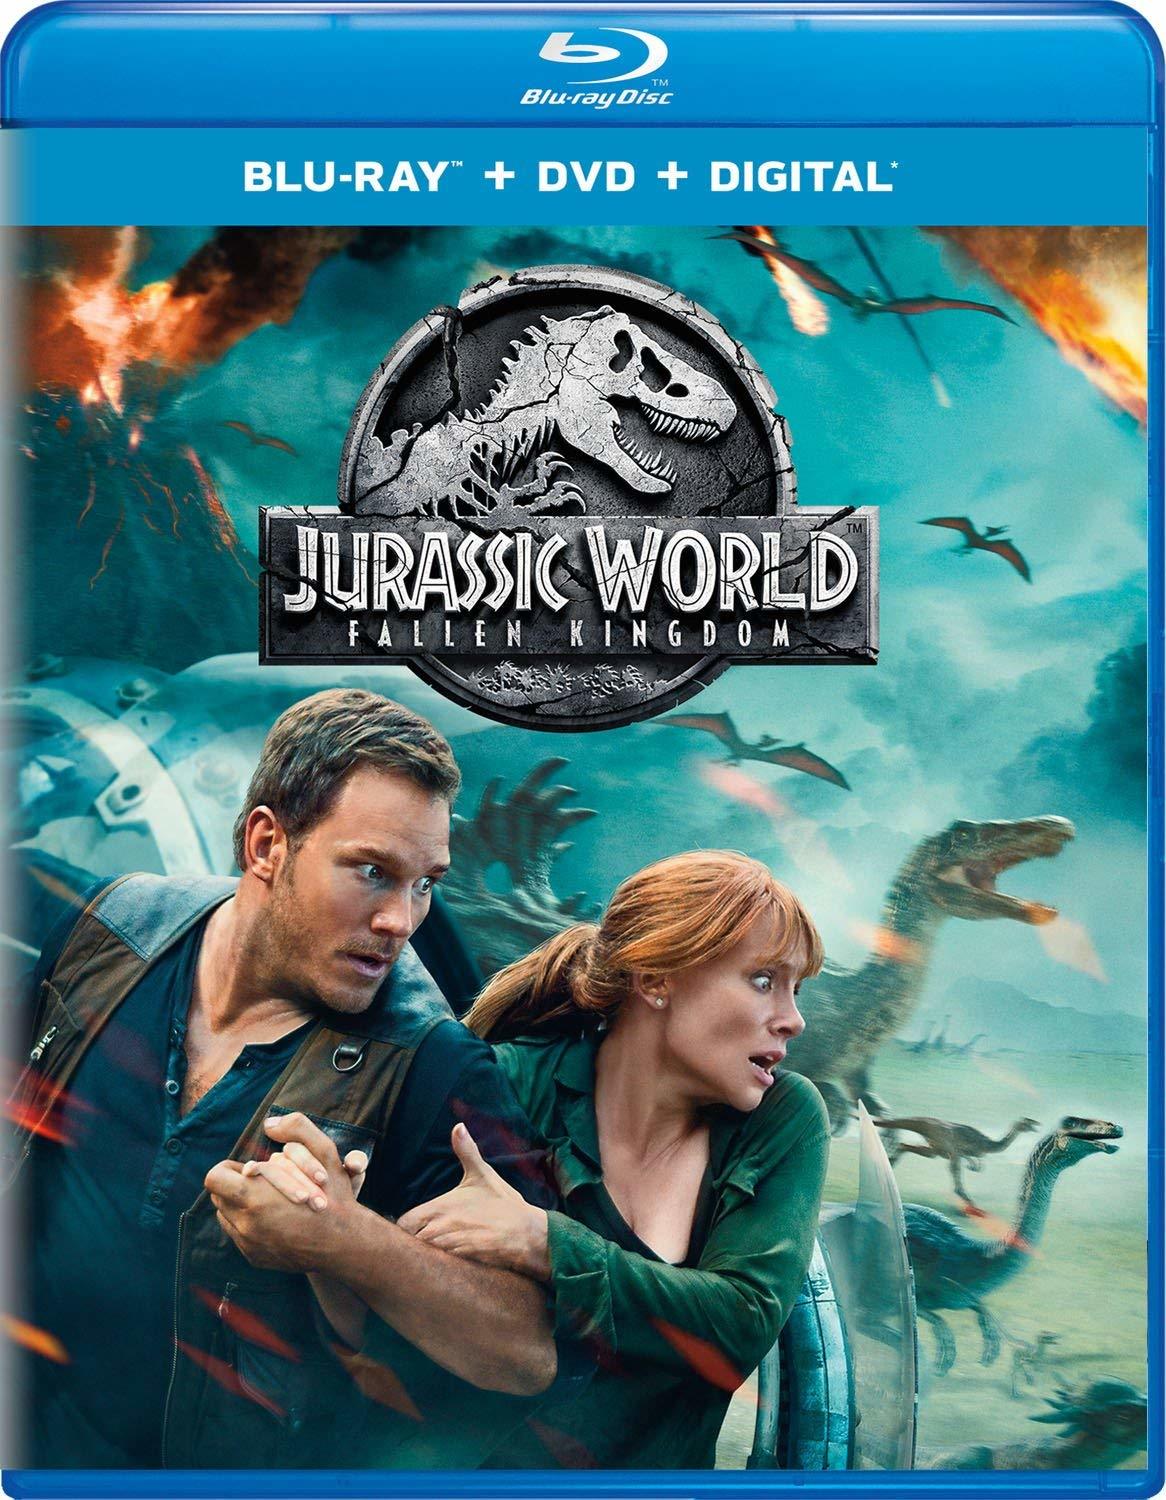 Reino - Jurassic World: Fallen Kingdom (2018) Jurassic World: El Reino Caído (2018) [DTS 5.1 + SUP] [Blu Ray-Rip] 208164_front